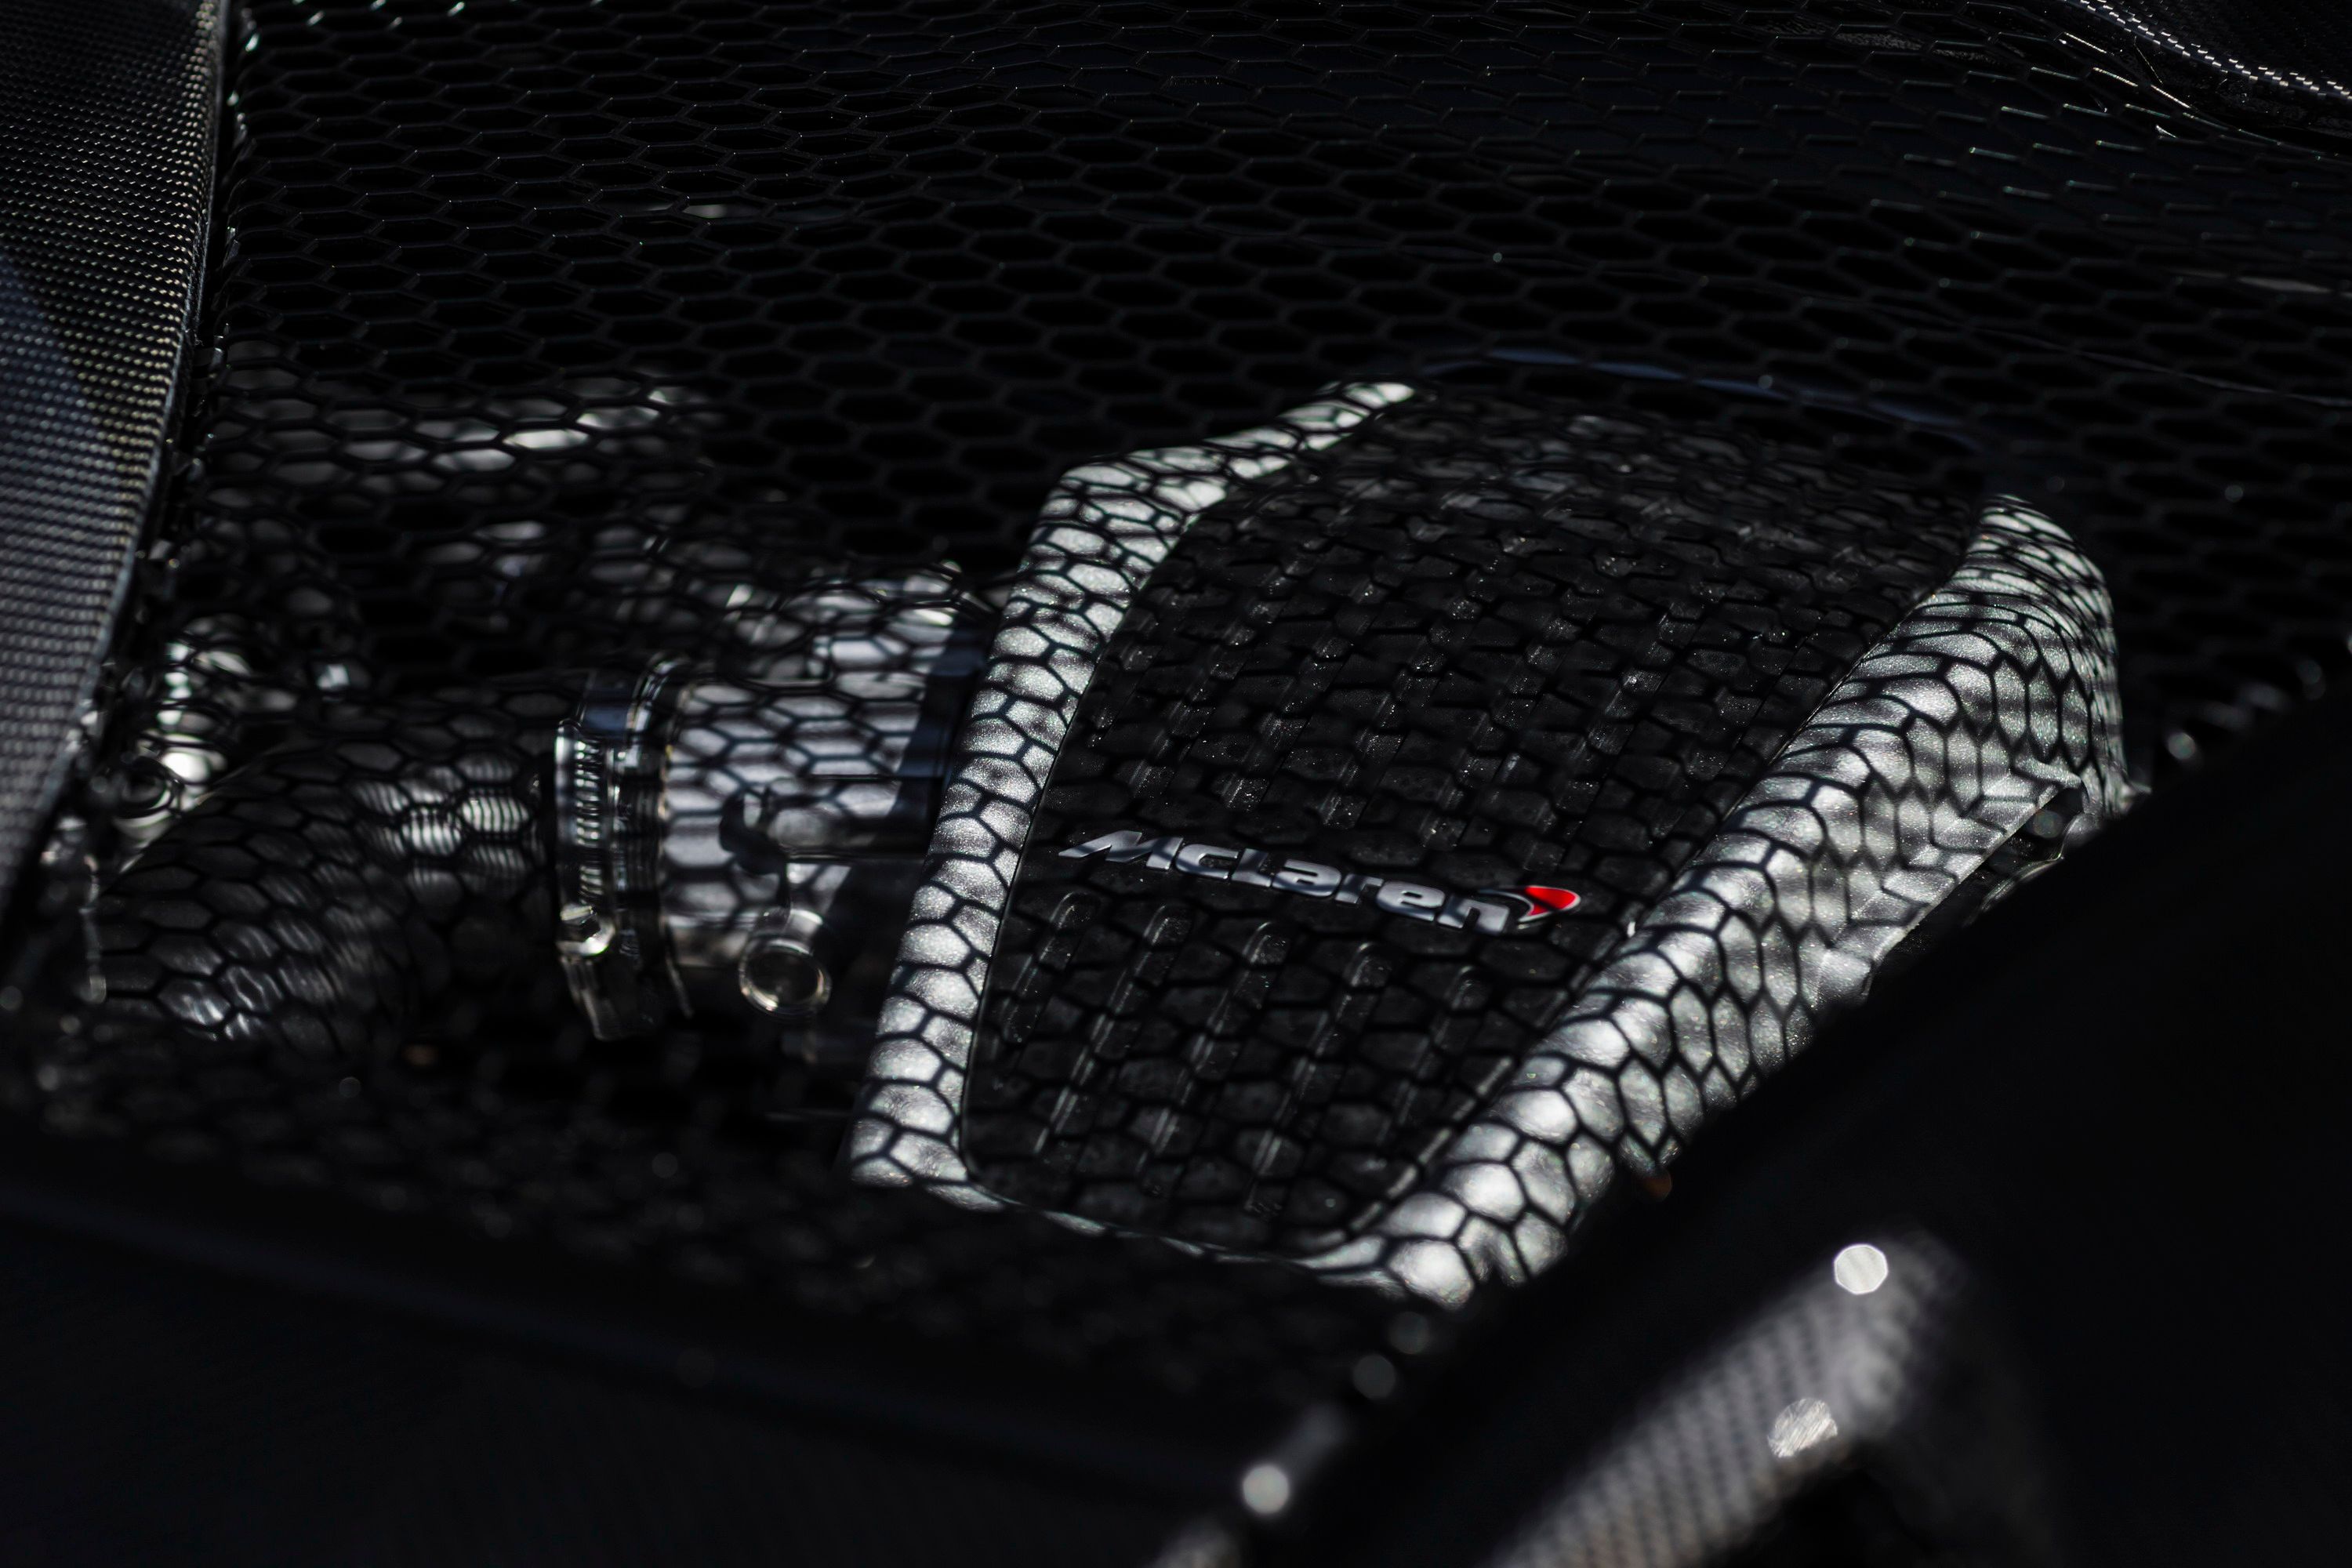 2016 McLaren 570S Coupe